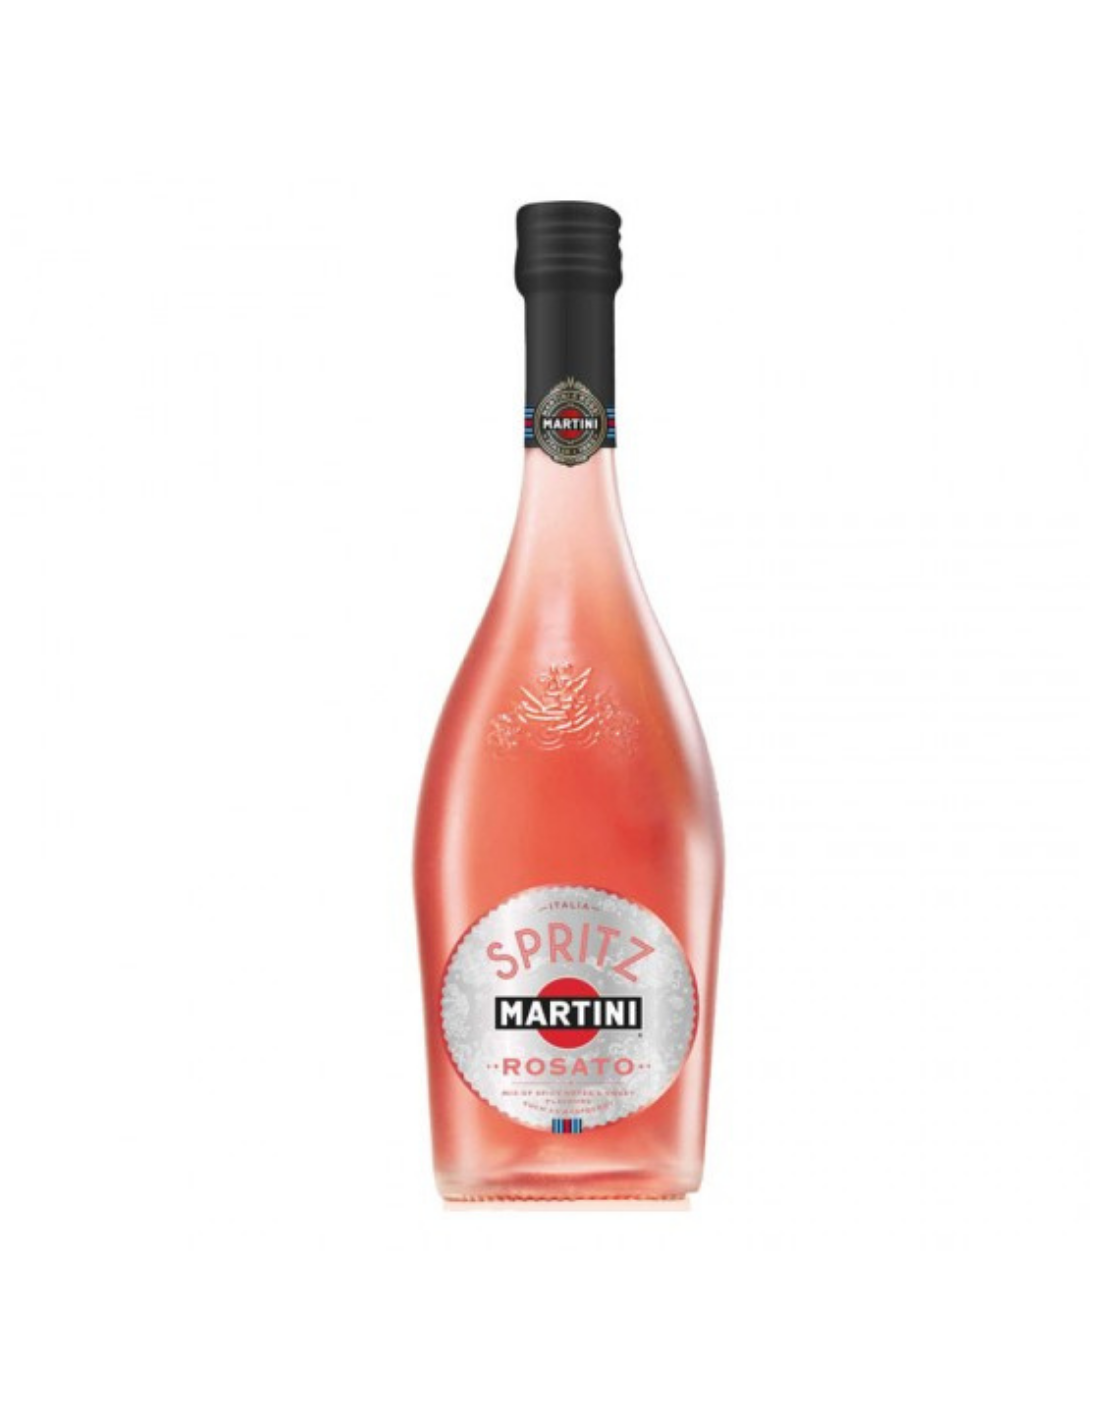 Aperitiv Martini Spritz Rosato, 0.75L, 8% alc., Italia alcooldiscount.ro